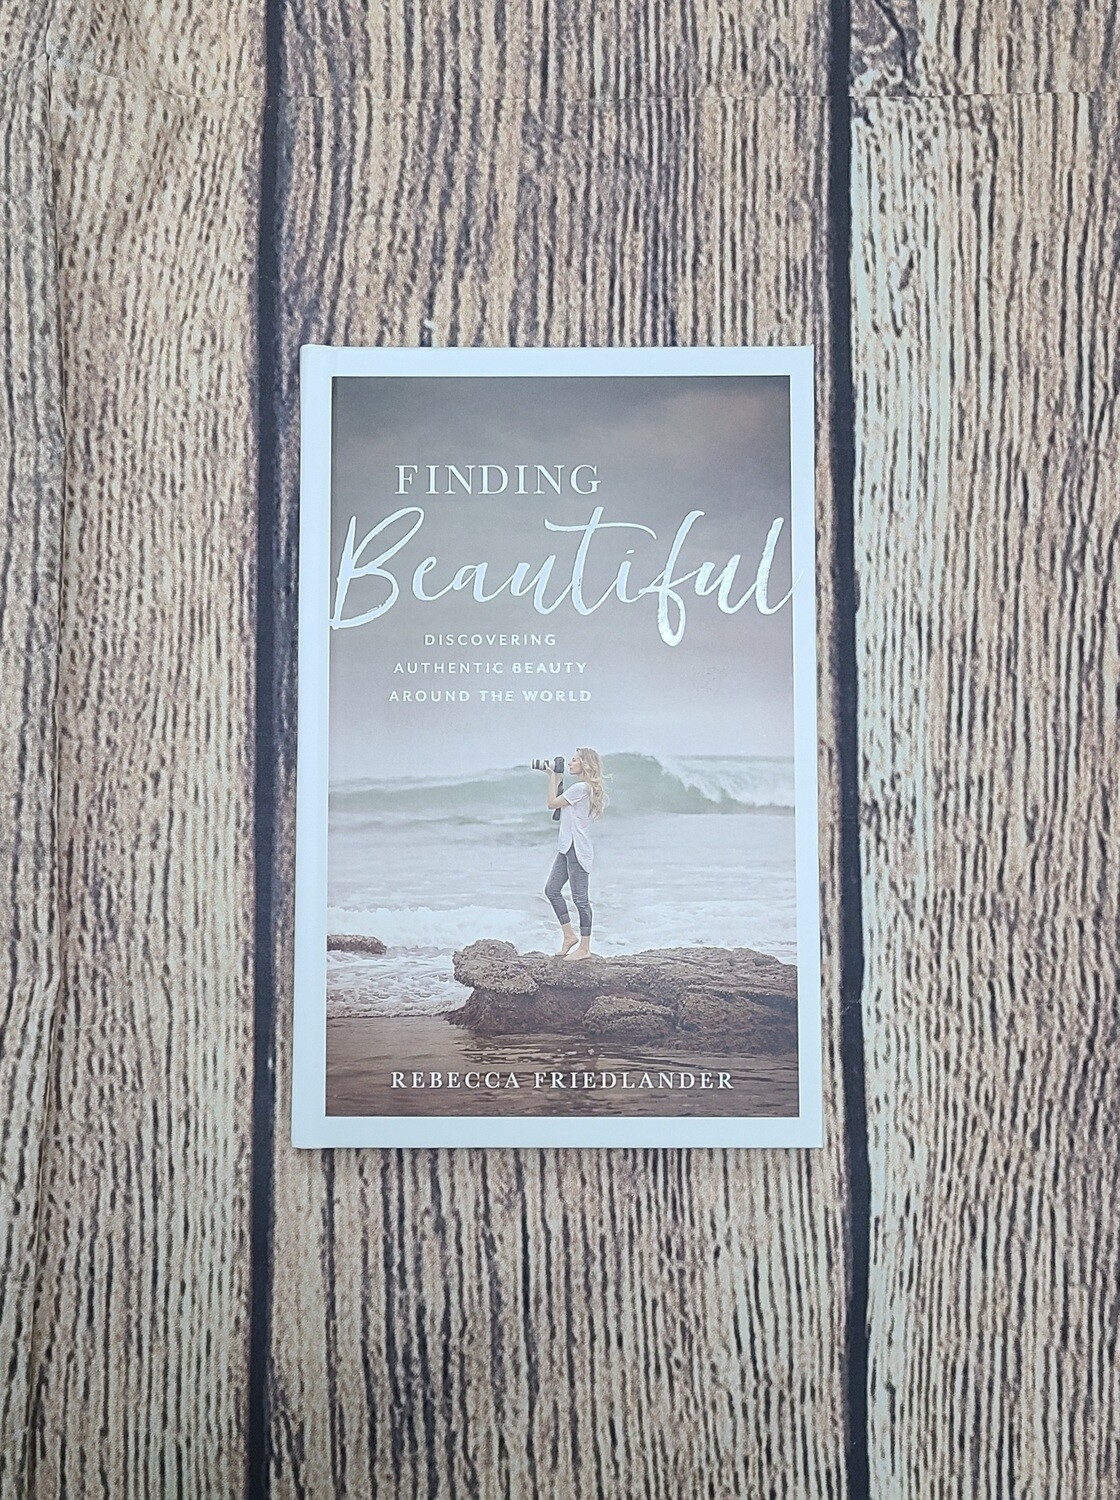 Finding Beautiful by Rebecca Friedlander